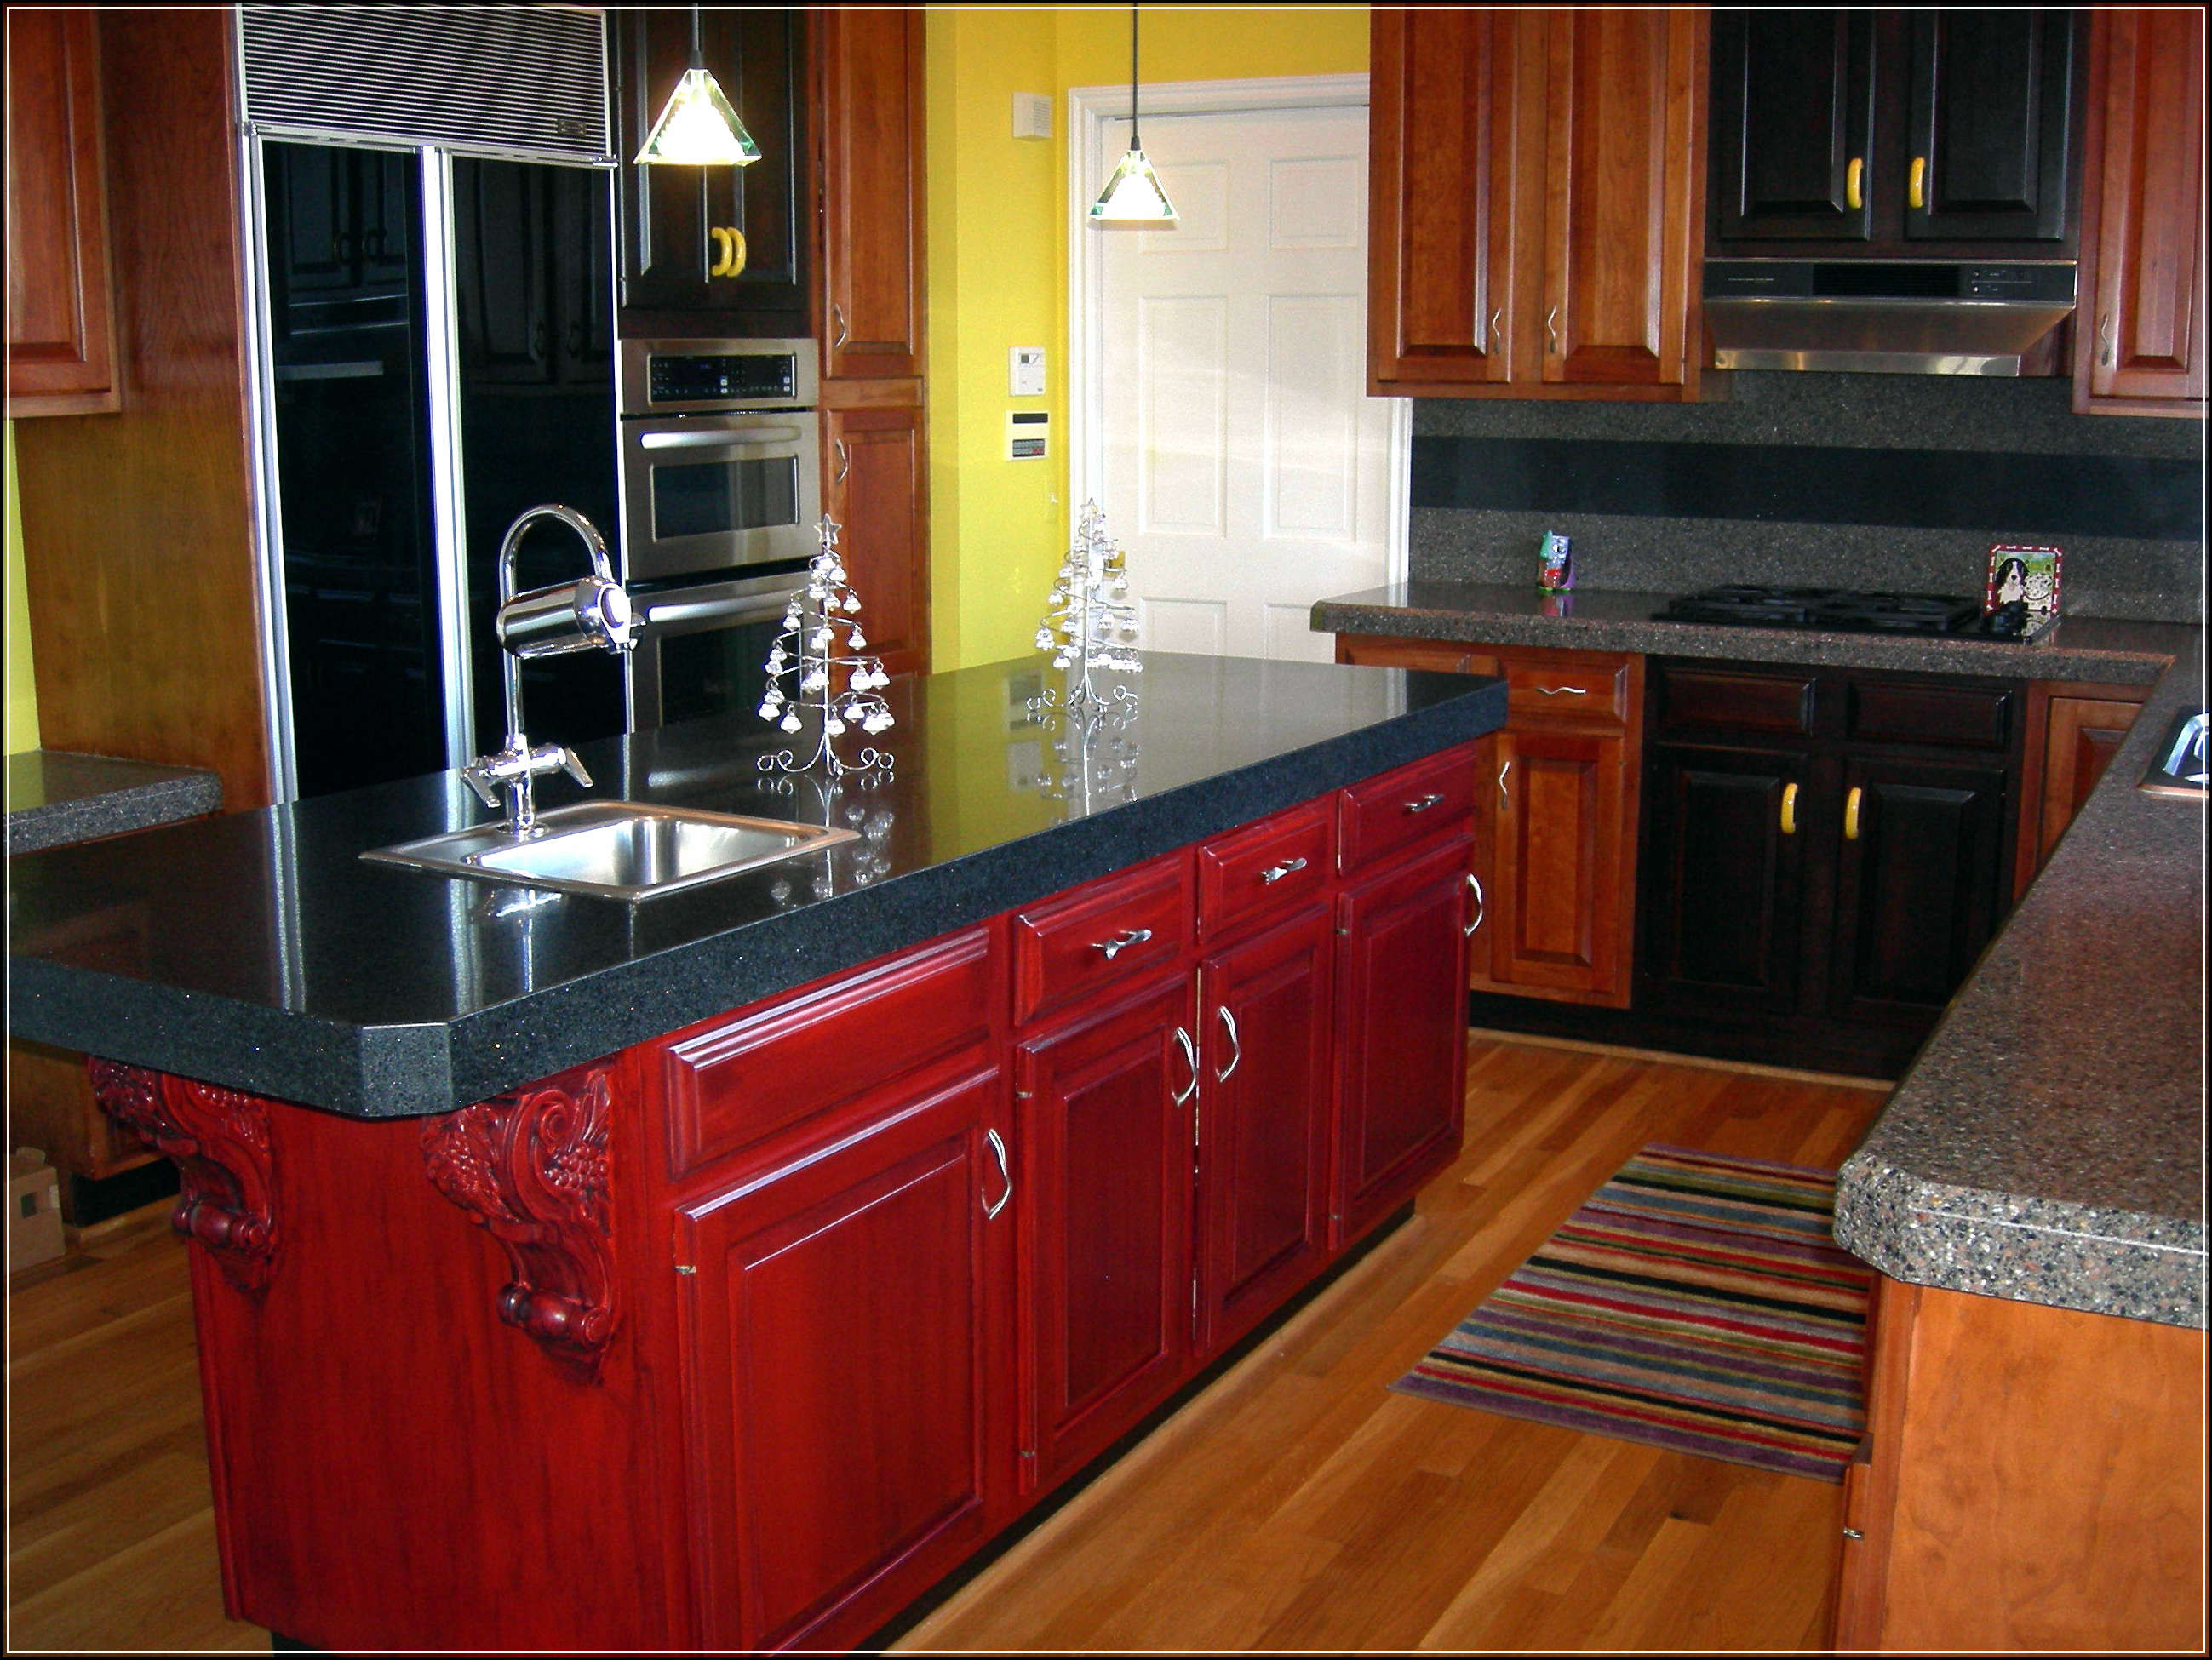 Best ideas about DIY Refinish Kitchen Cabinet
. Save or Pin How to Refinish Kitchen Cabinets with DIY Style Now.